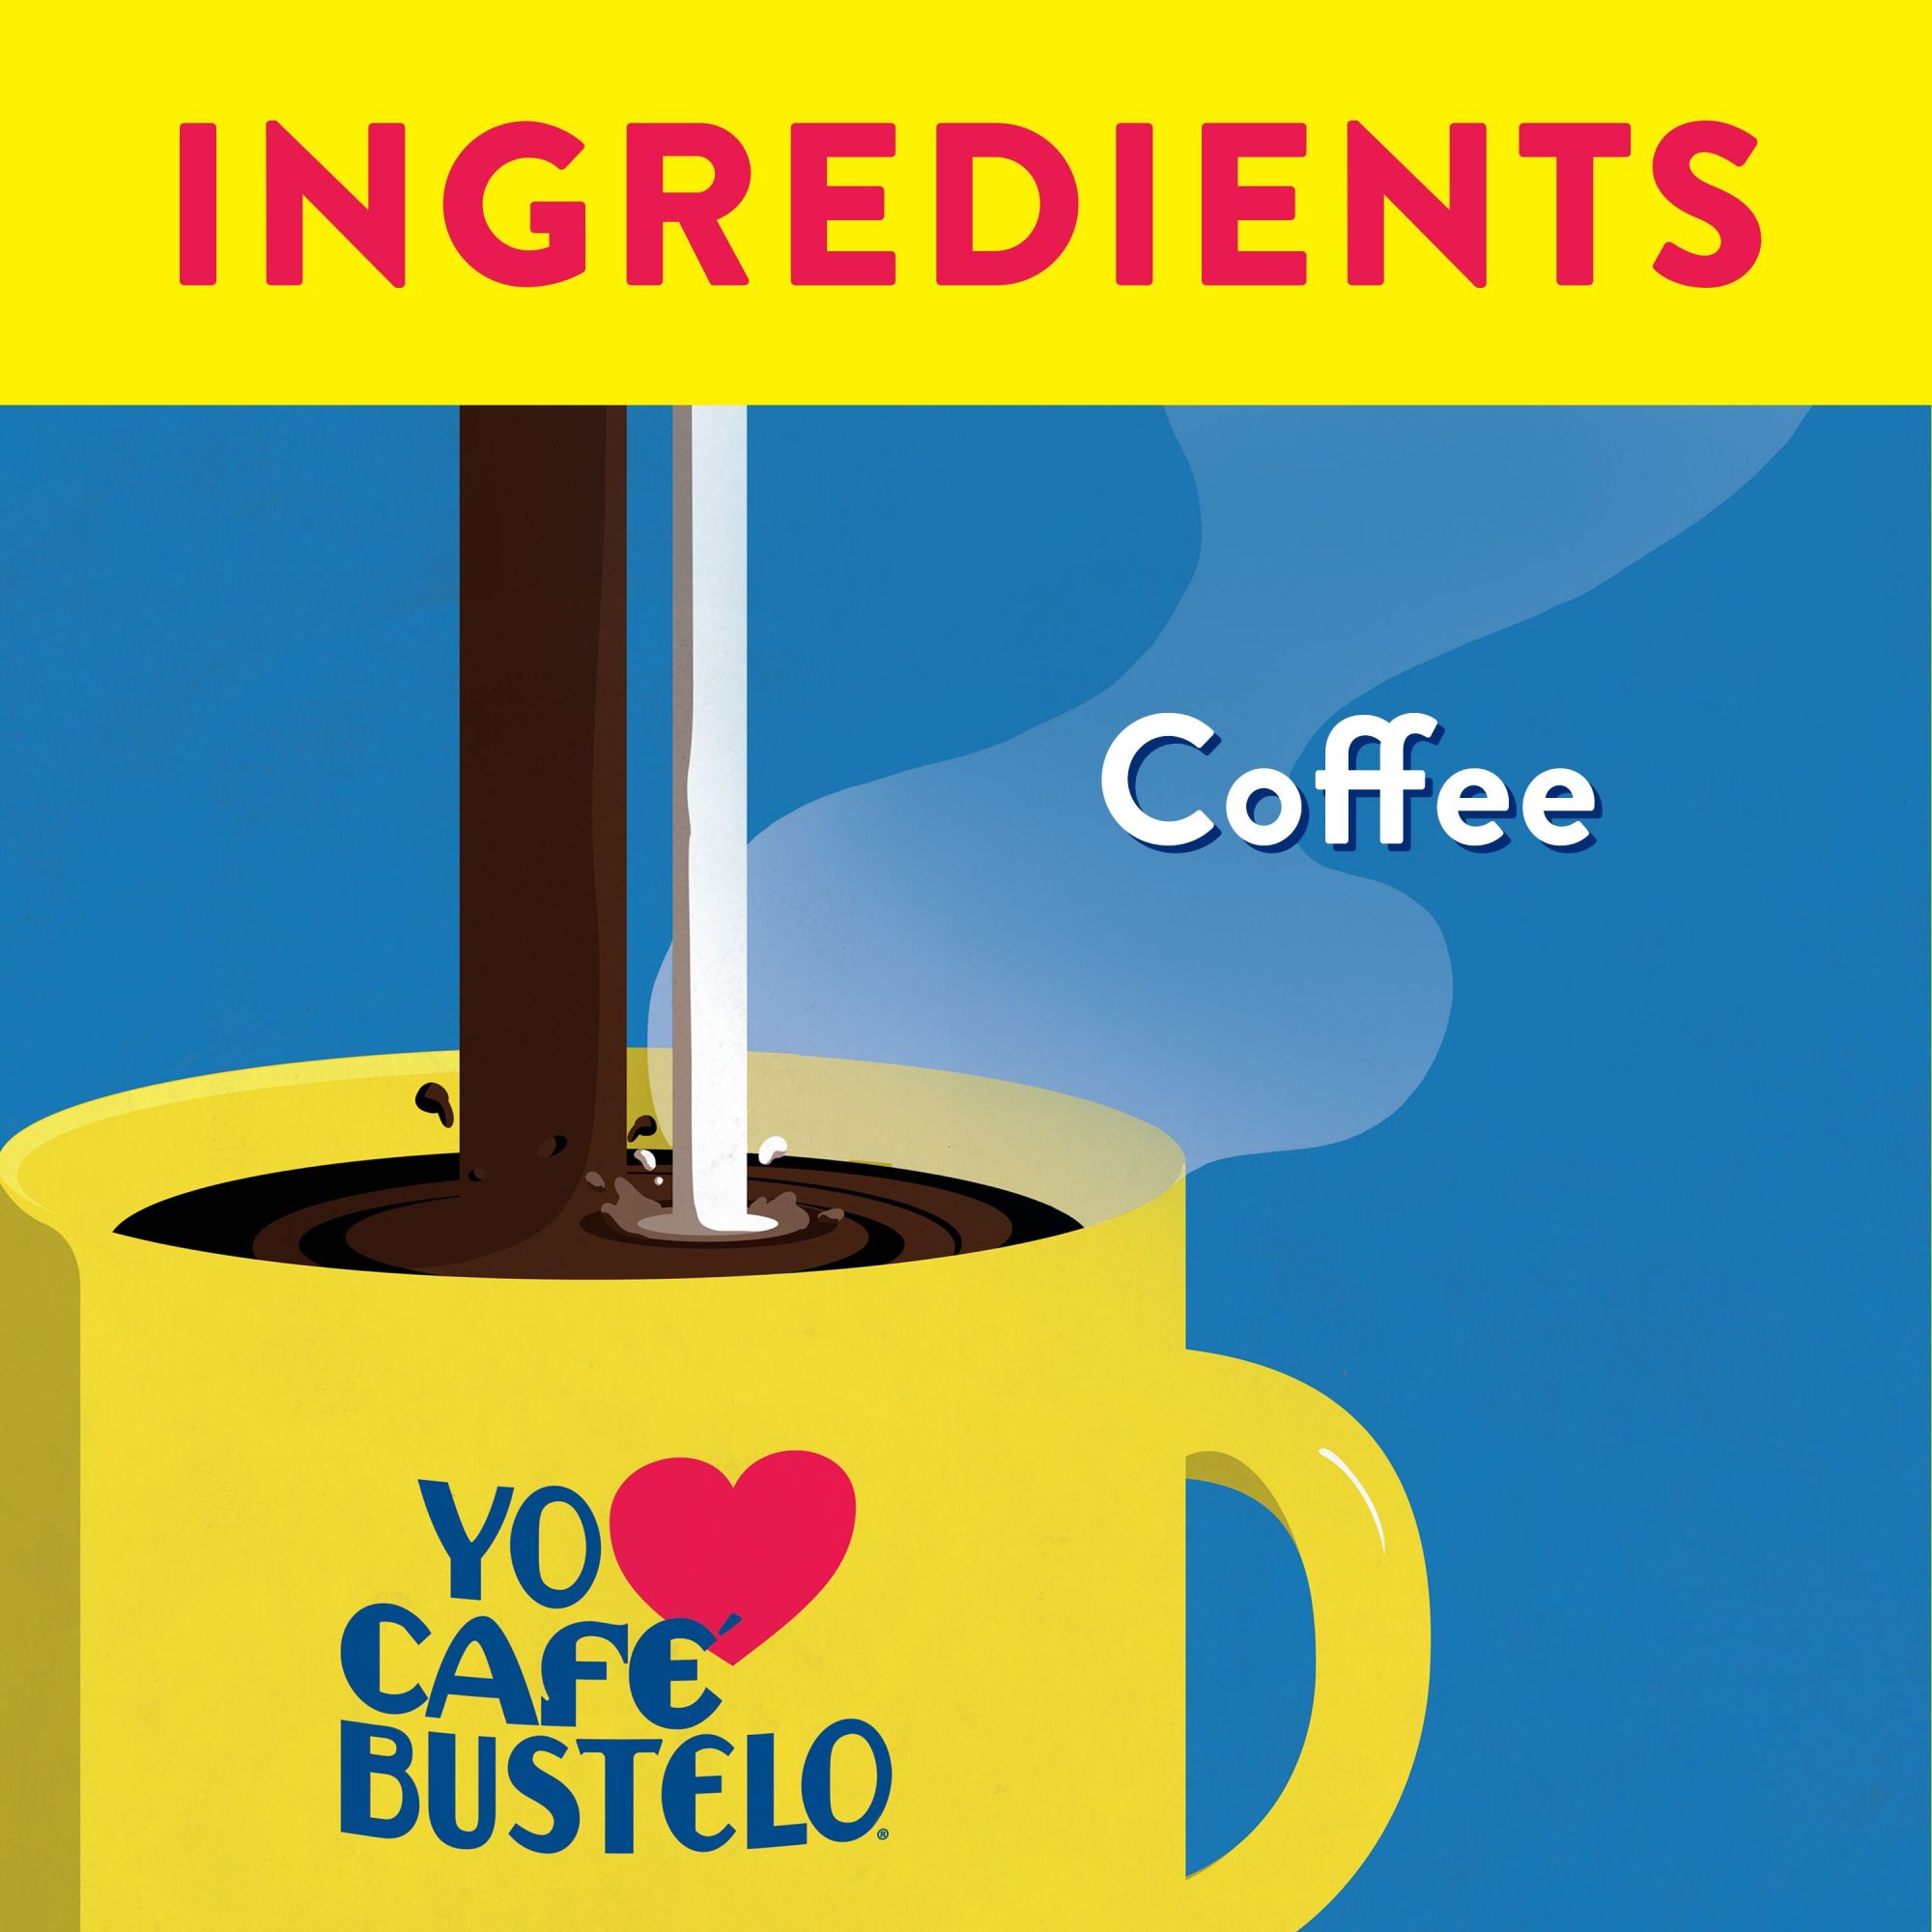 Caf Bustelo Espresso Style, Dark Roast Coffee, Keurig K-Cup Pods, 24 Count Box - image 4 of 12